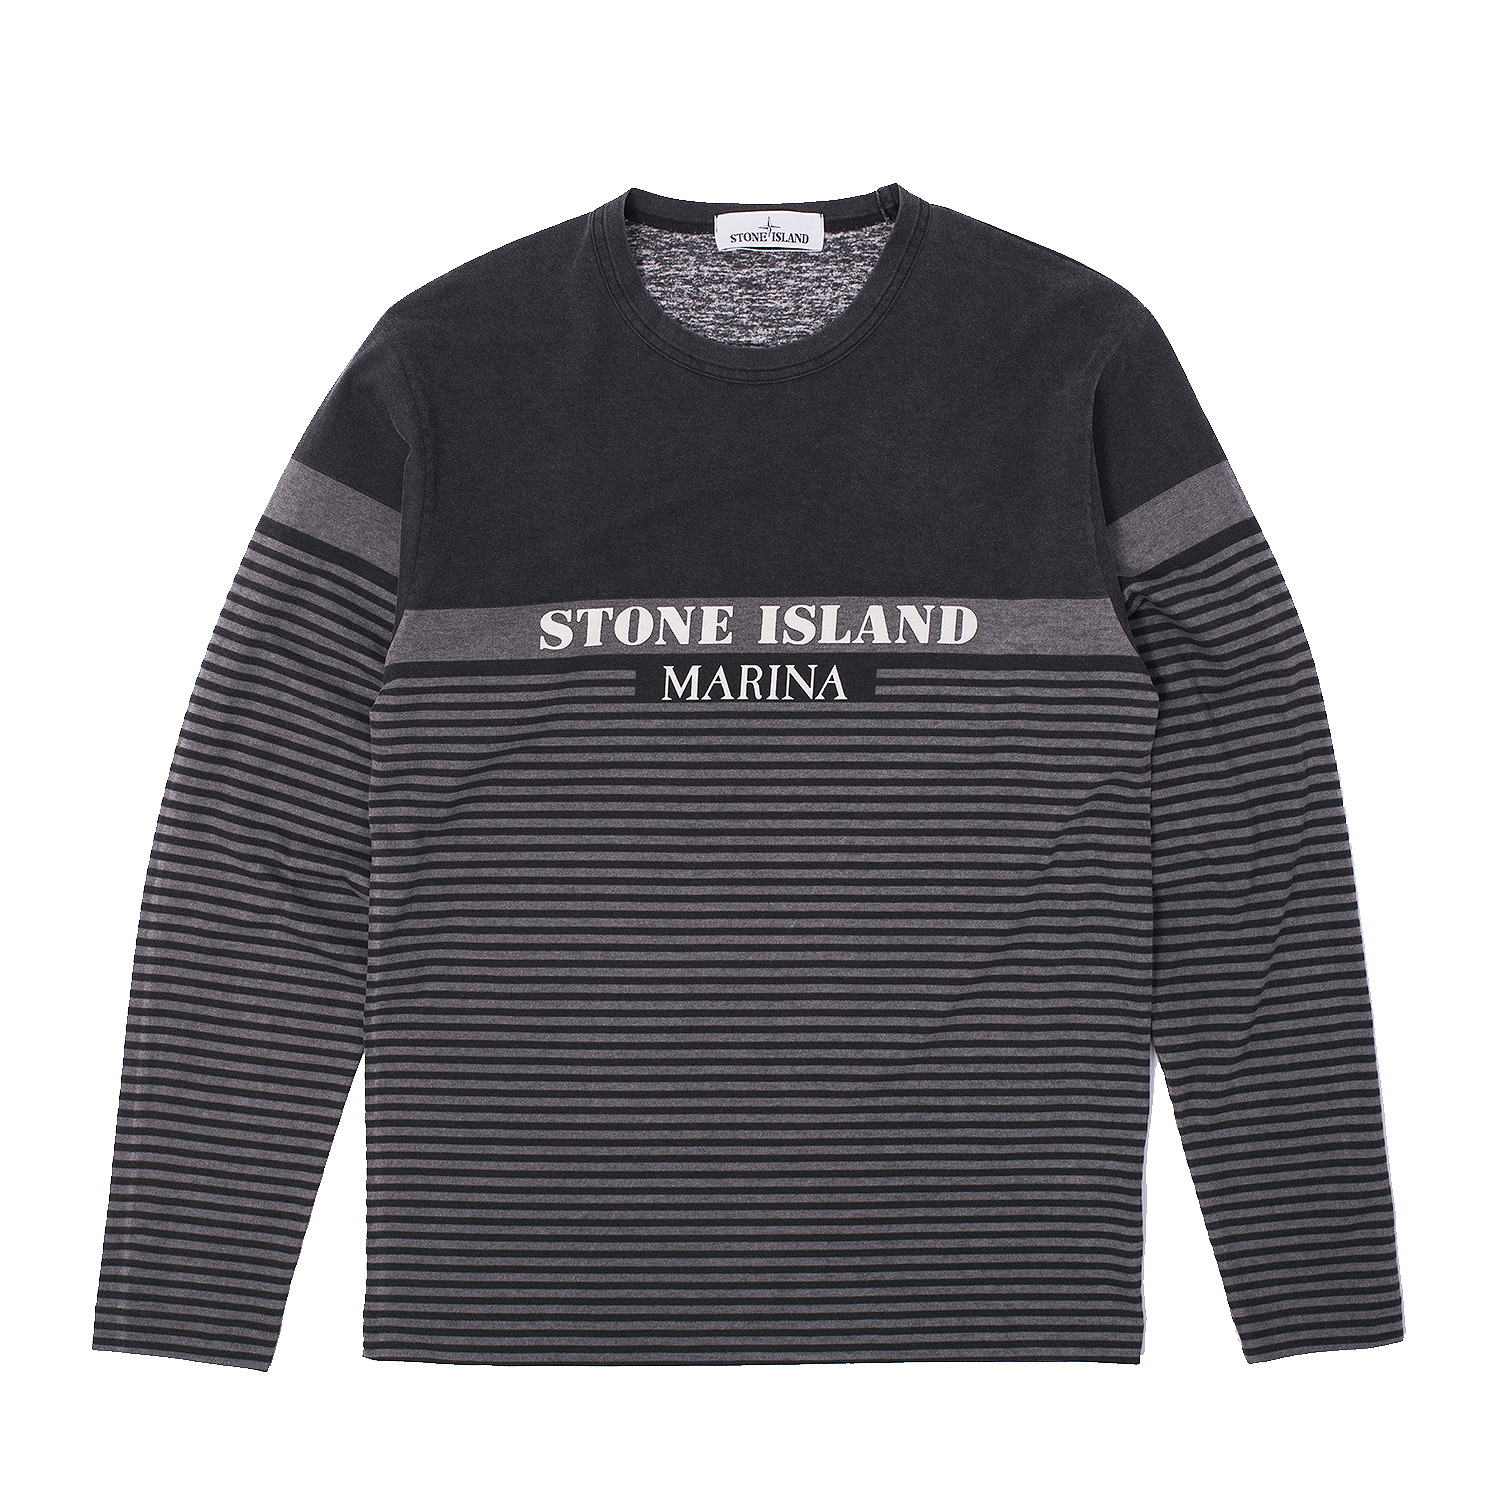 Stone Island Corrosion Print Marina Longsleeve T-Shirt | FIRMAMENT